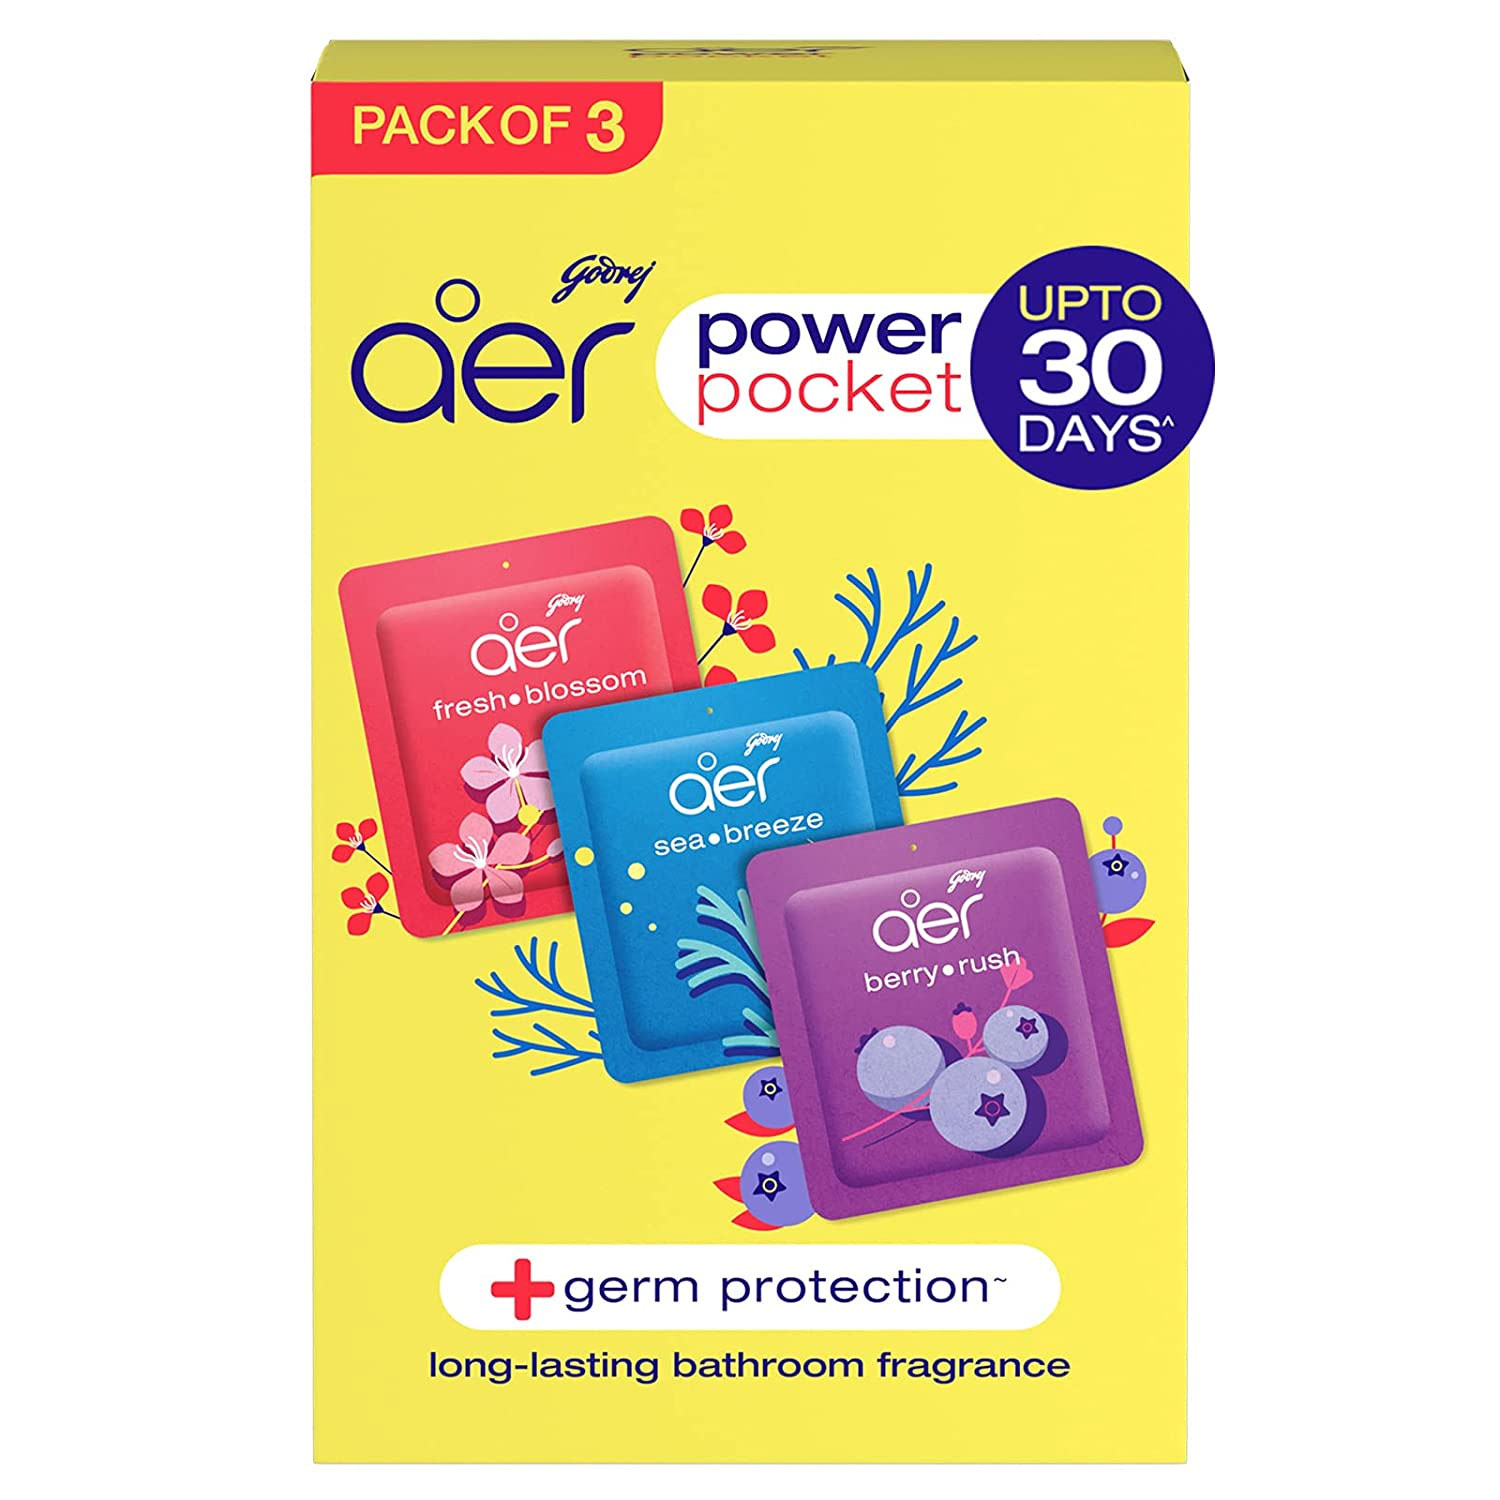 Aer Power Pocket